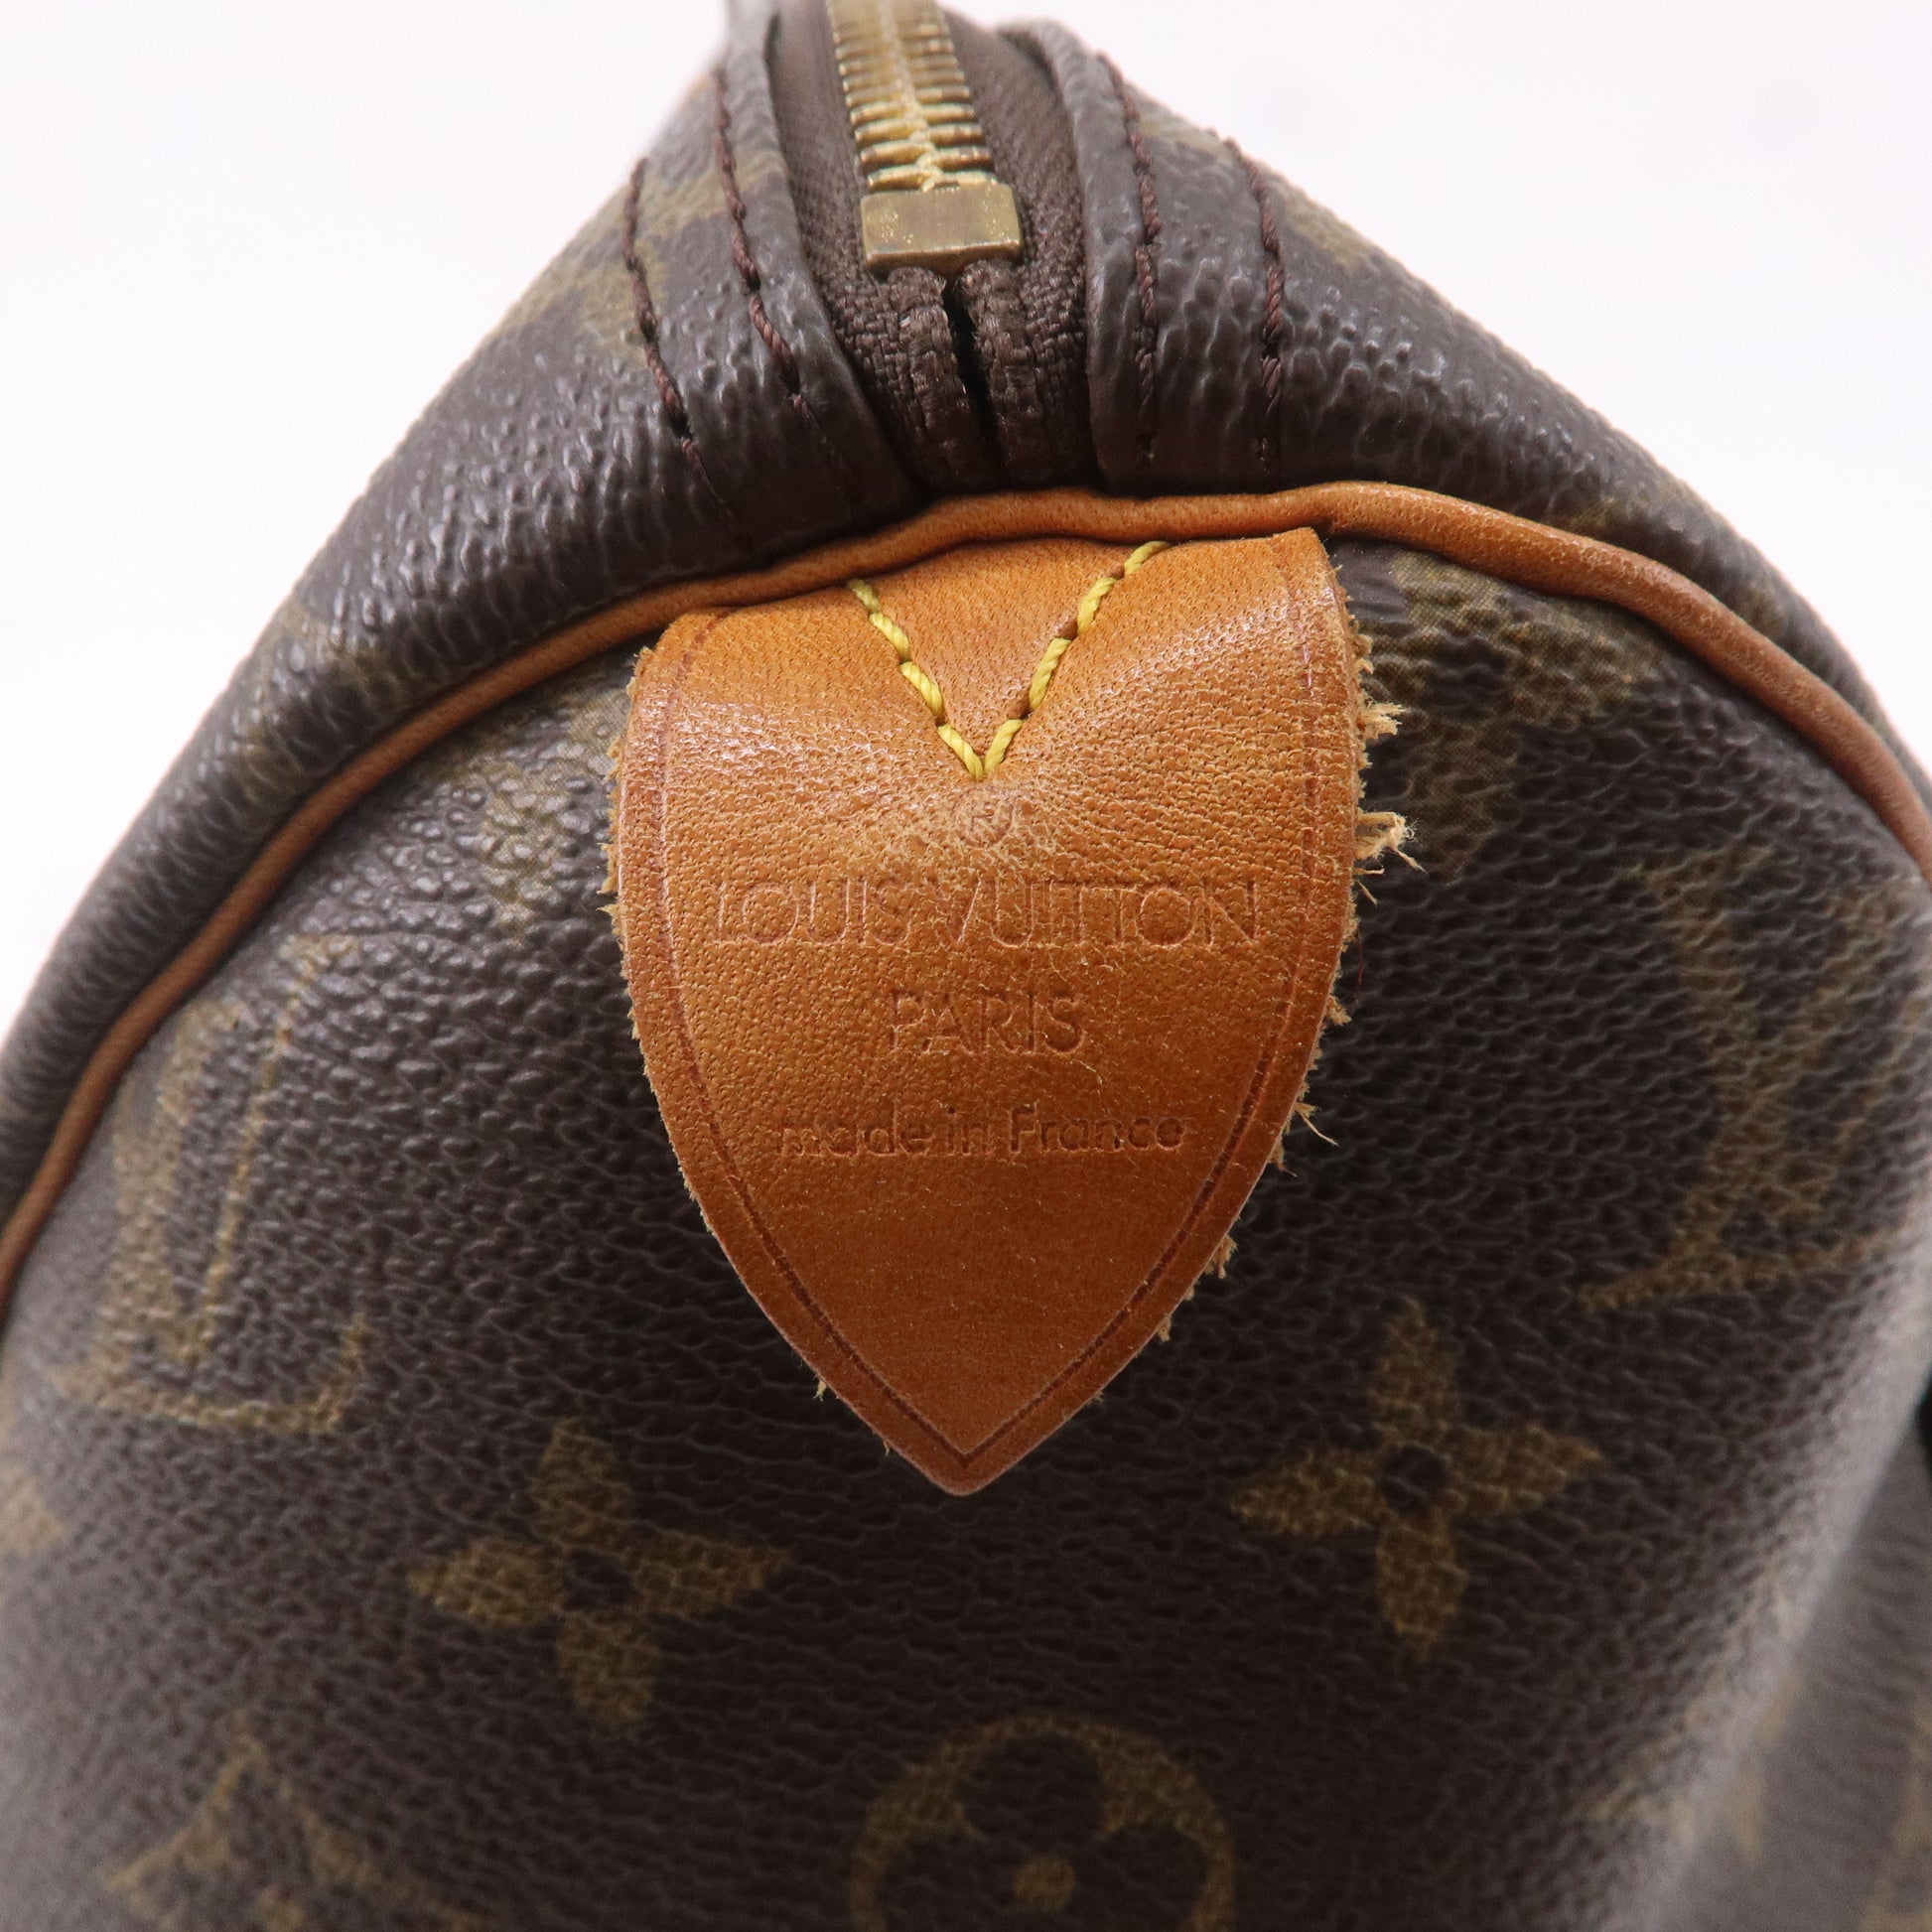 Louis Vuitton Monogram Speedy 40 Satchel - A World Of Goods For